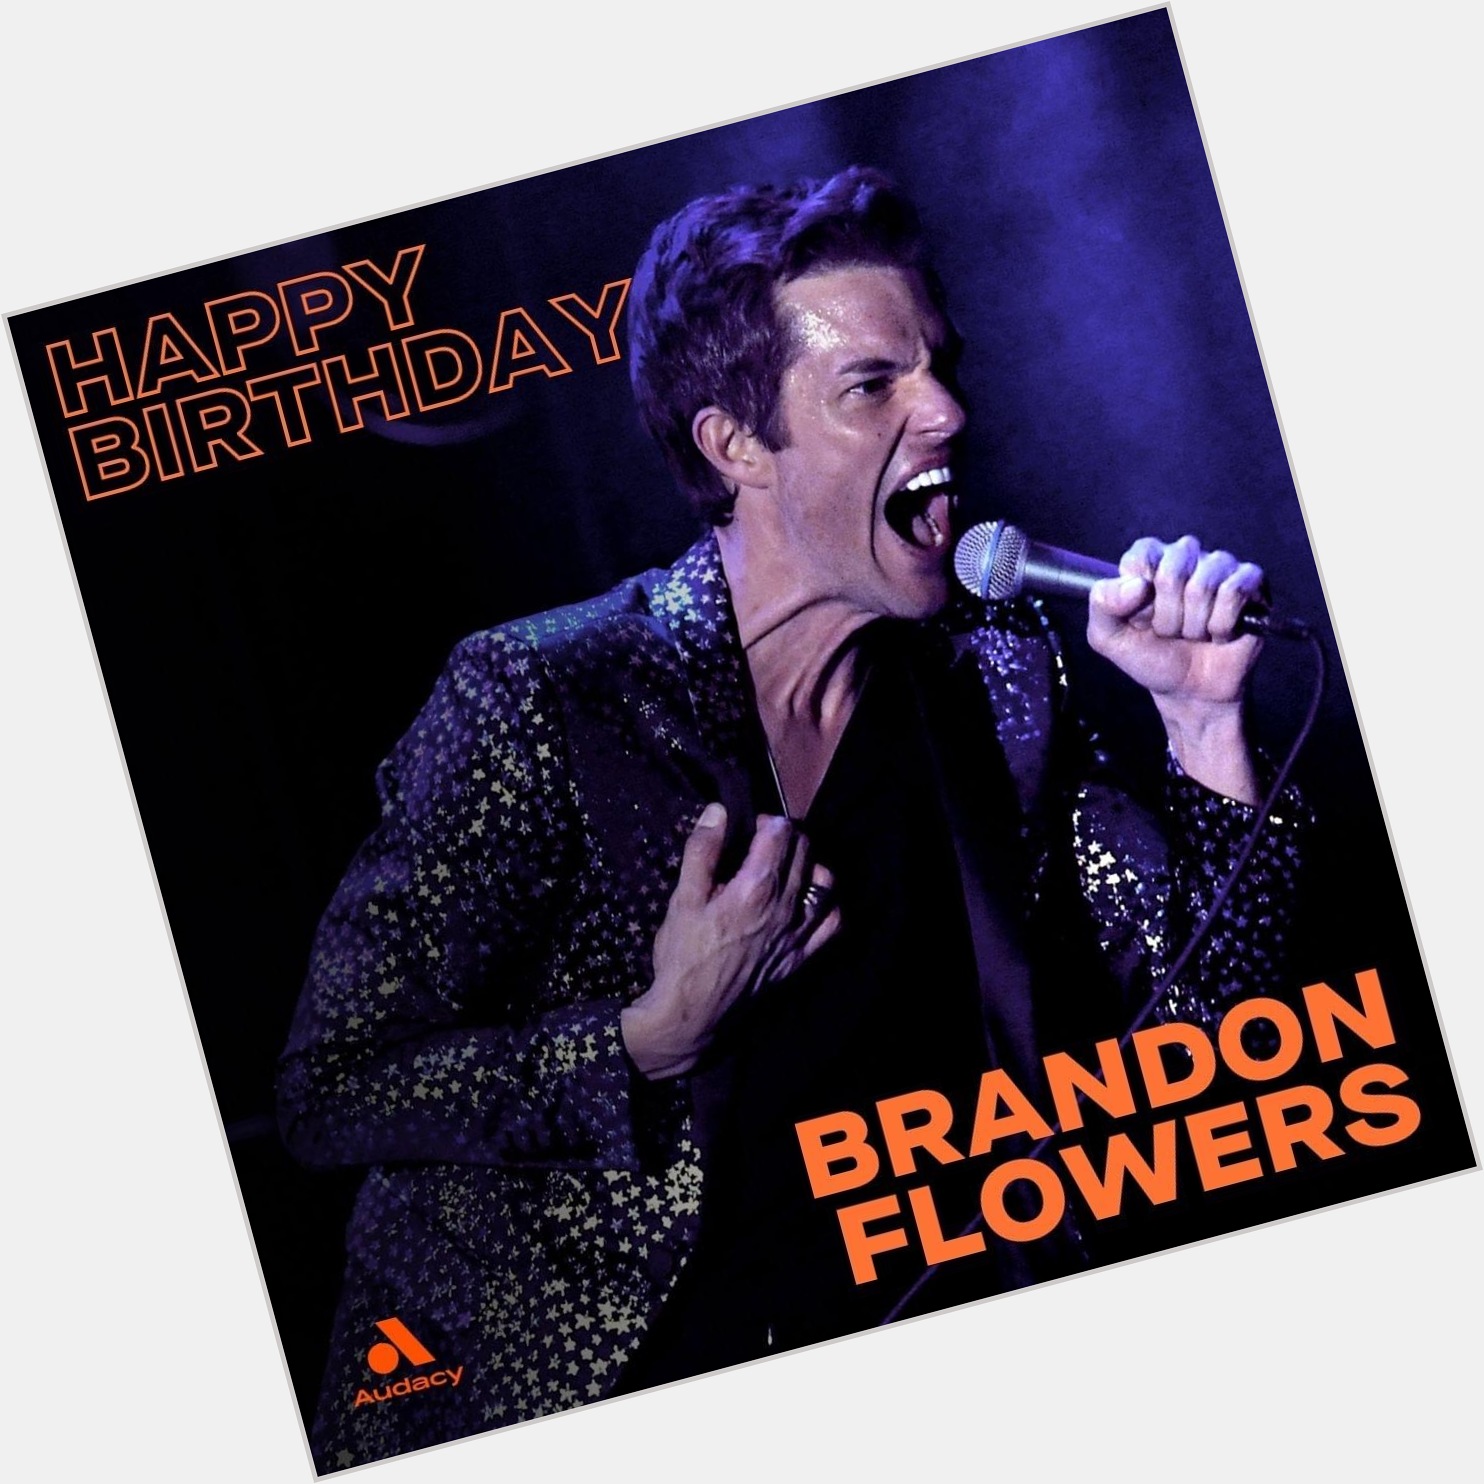 Turning 42 today, wishing Brandon Flowers a happy birthday 